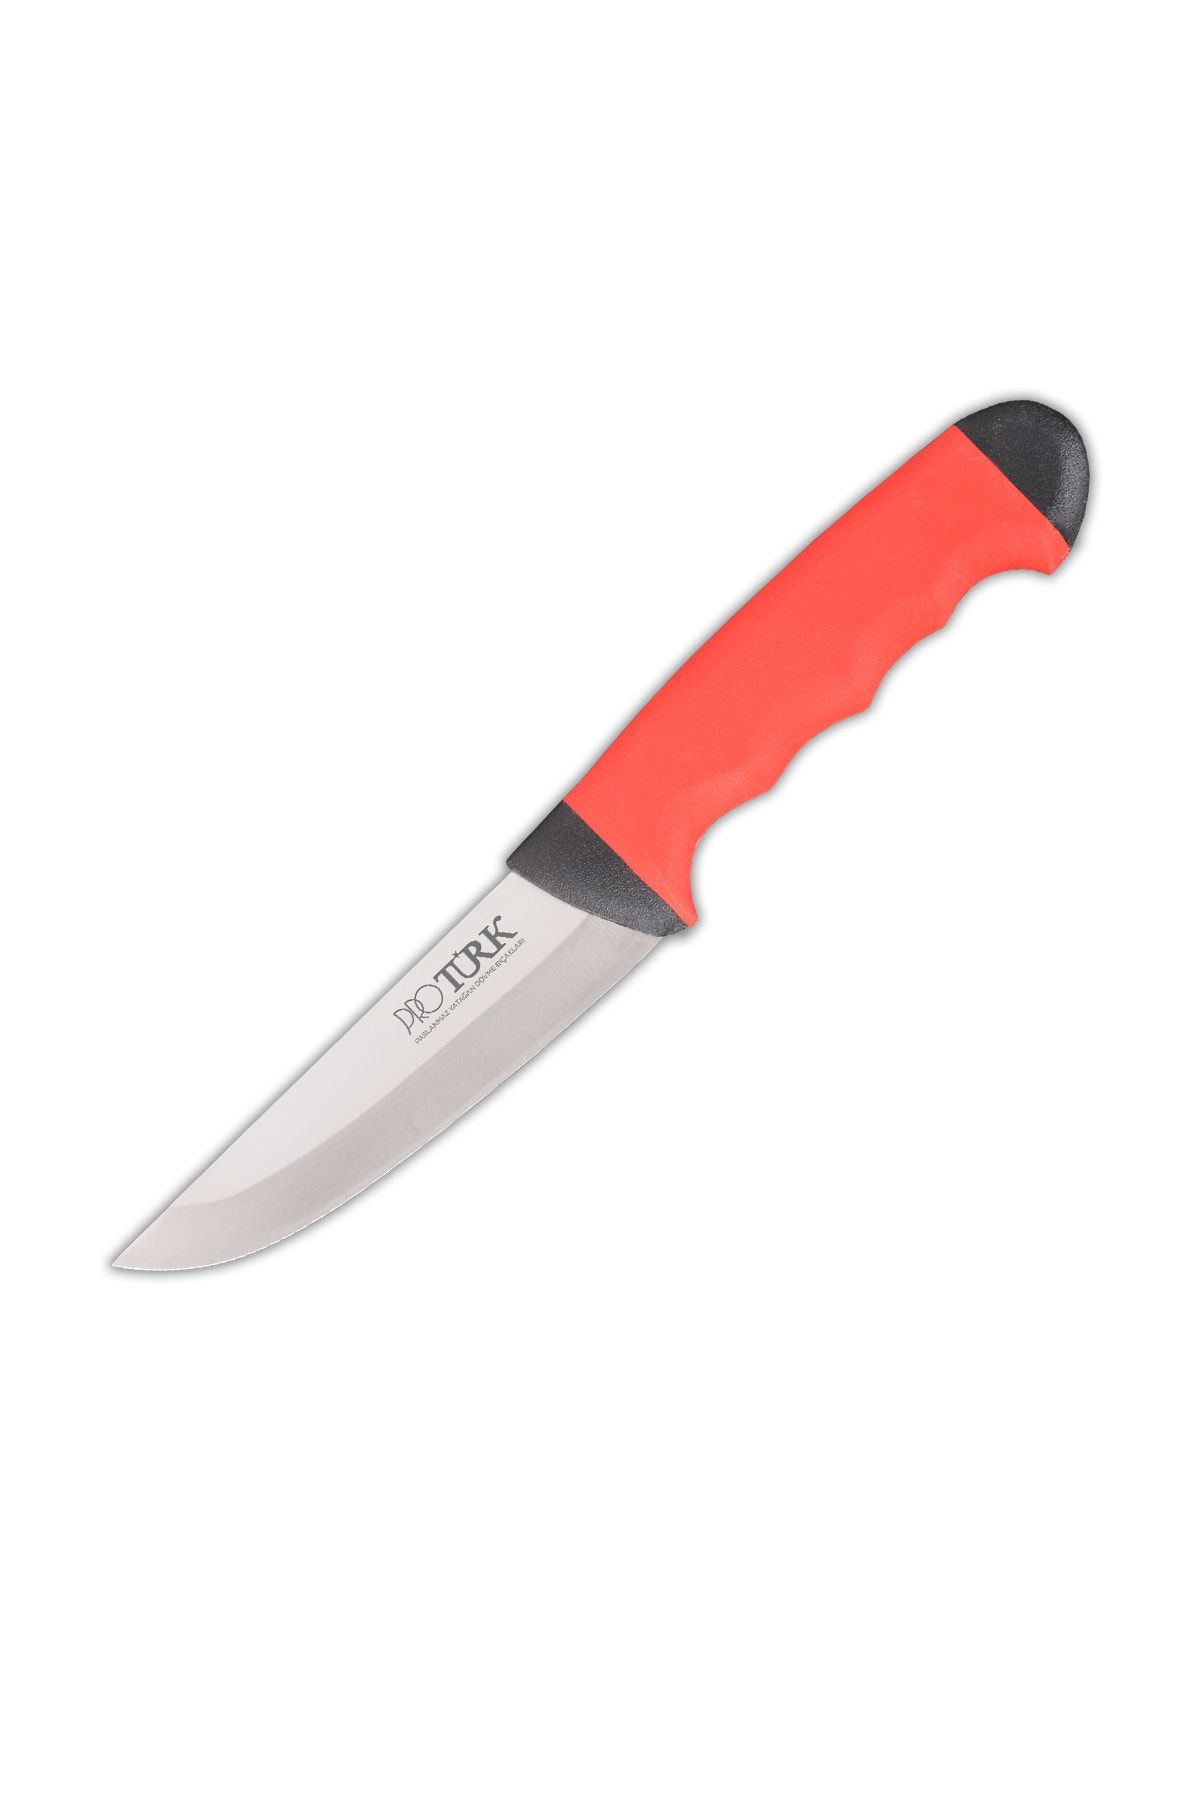 protürk 1 Numara Et Bıçağı